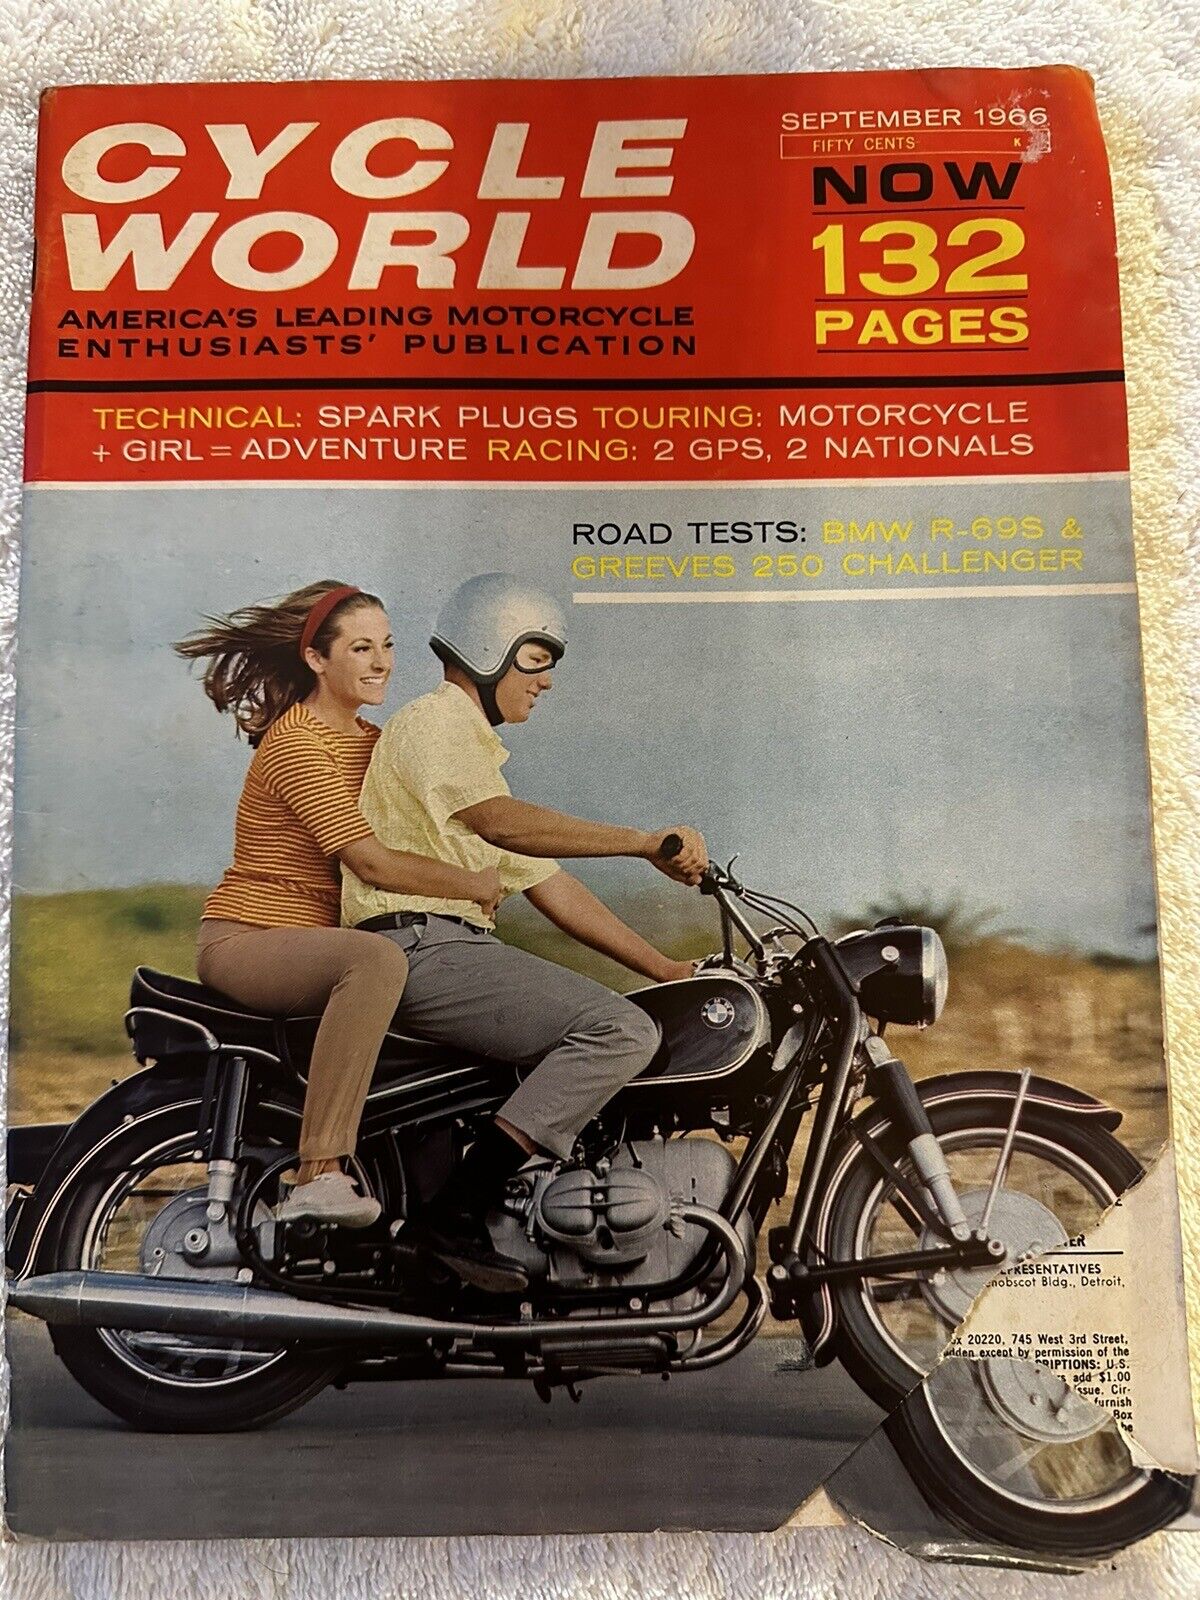 Vintage SEPTEMBER 1966 CYCLE WORLD vintage motorcycle magazine